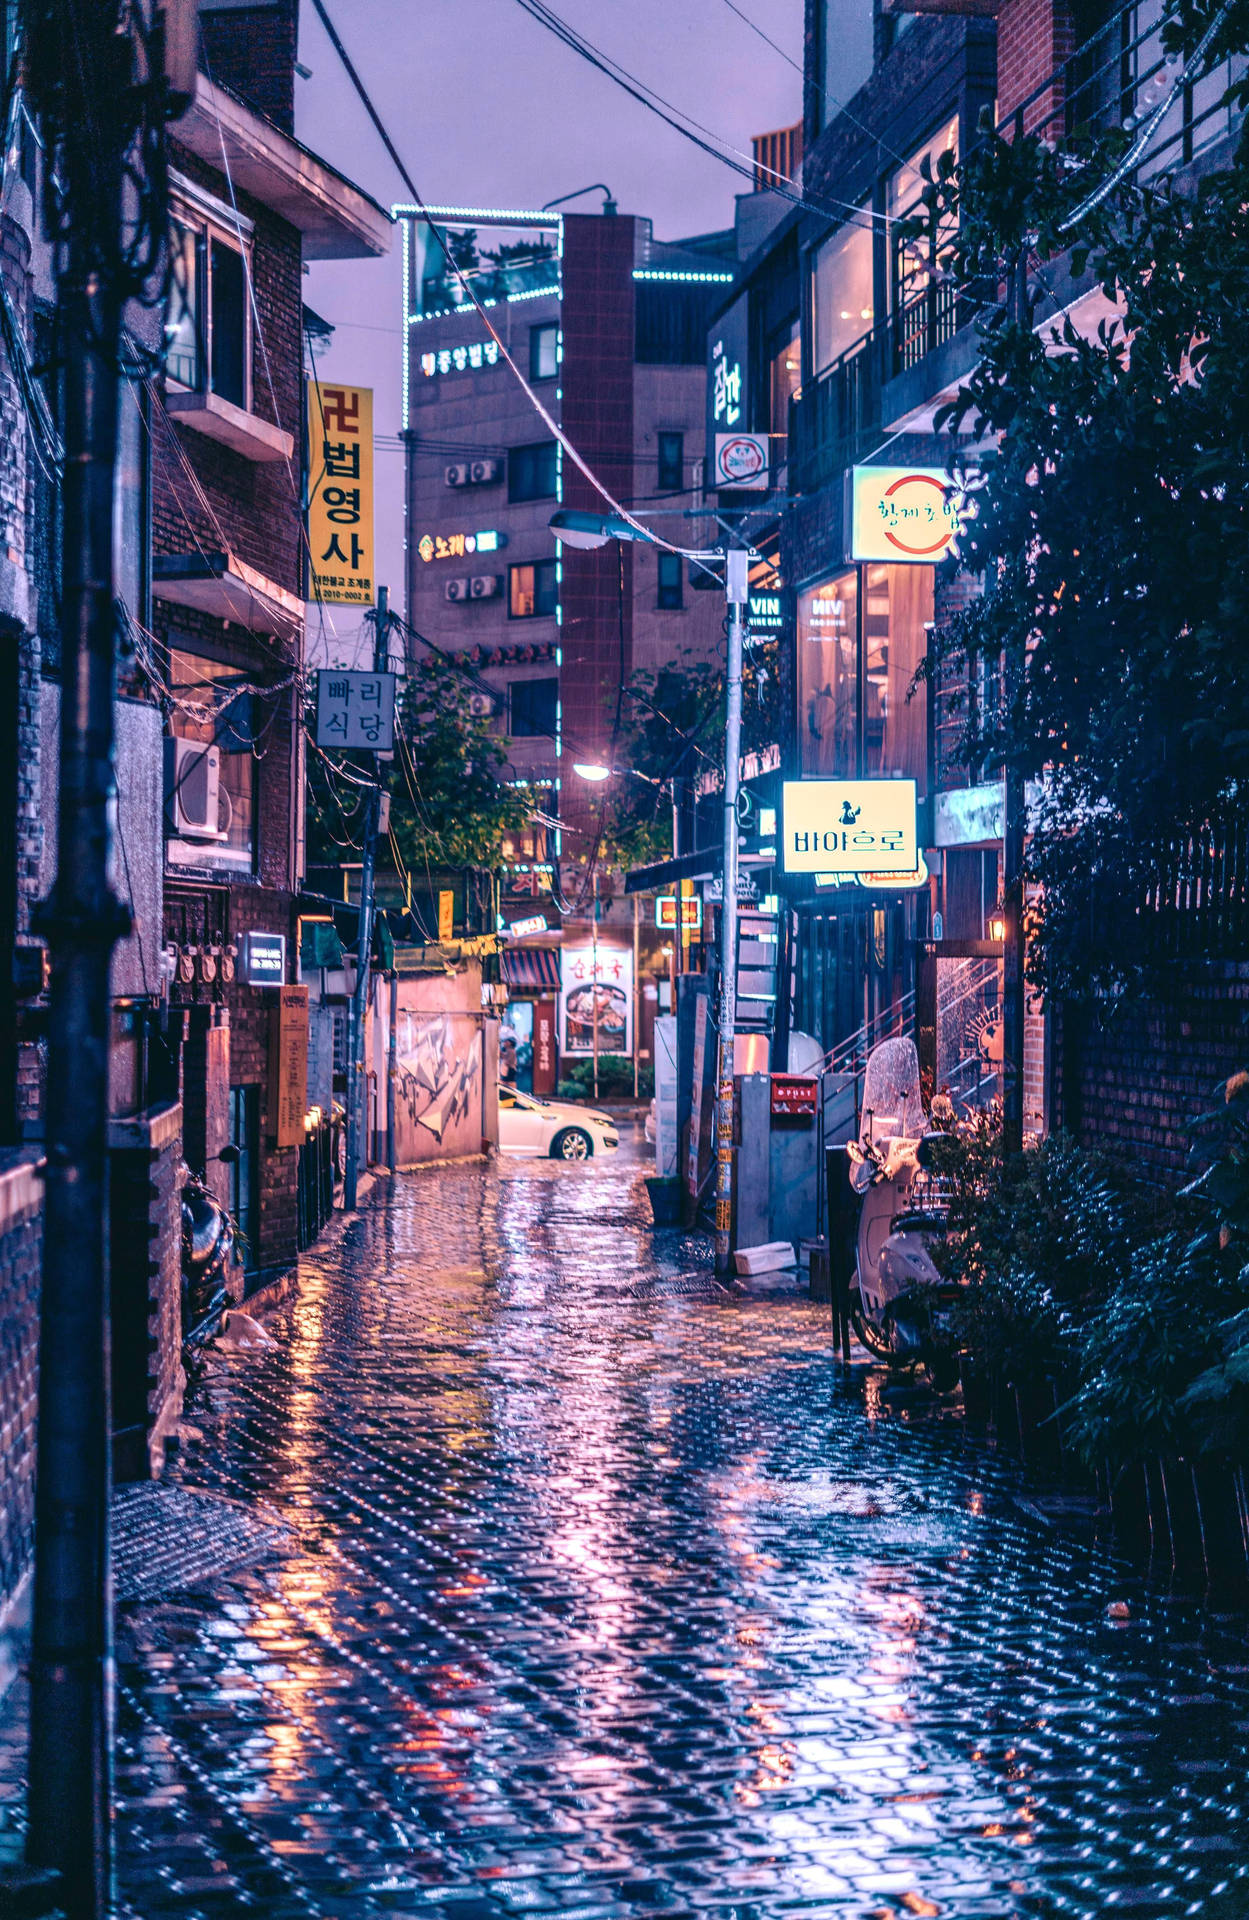 A glimpse of serenity: Korean Aesthetic in a Wet Street Scene Wallpaper